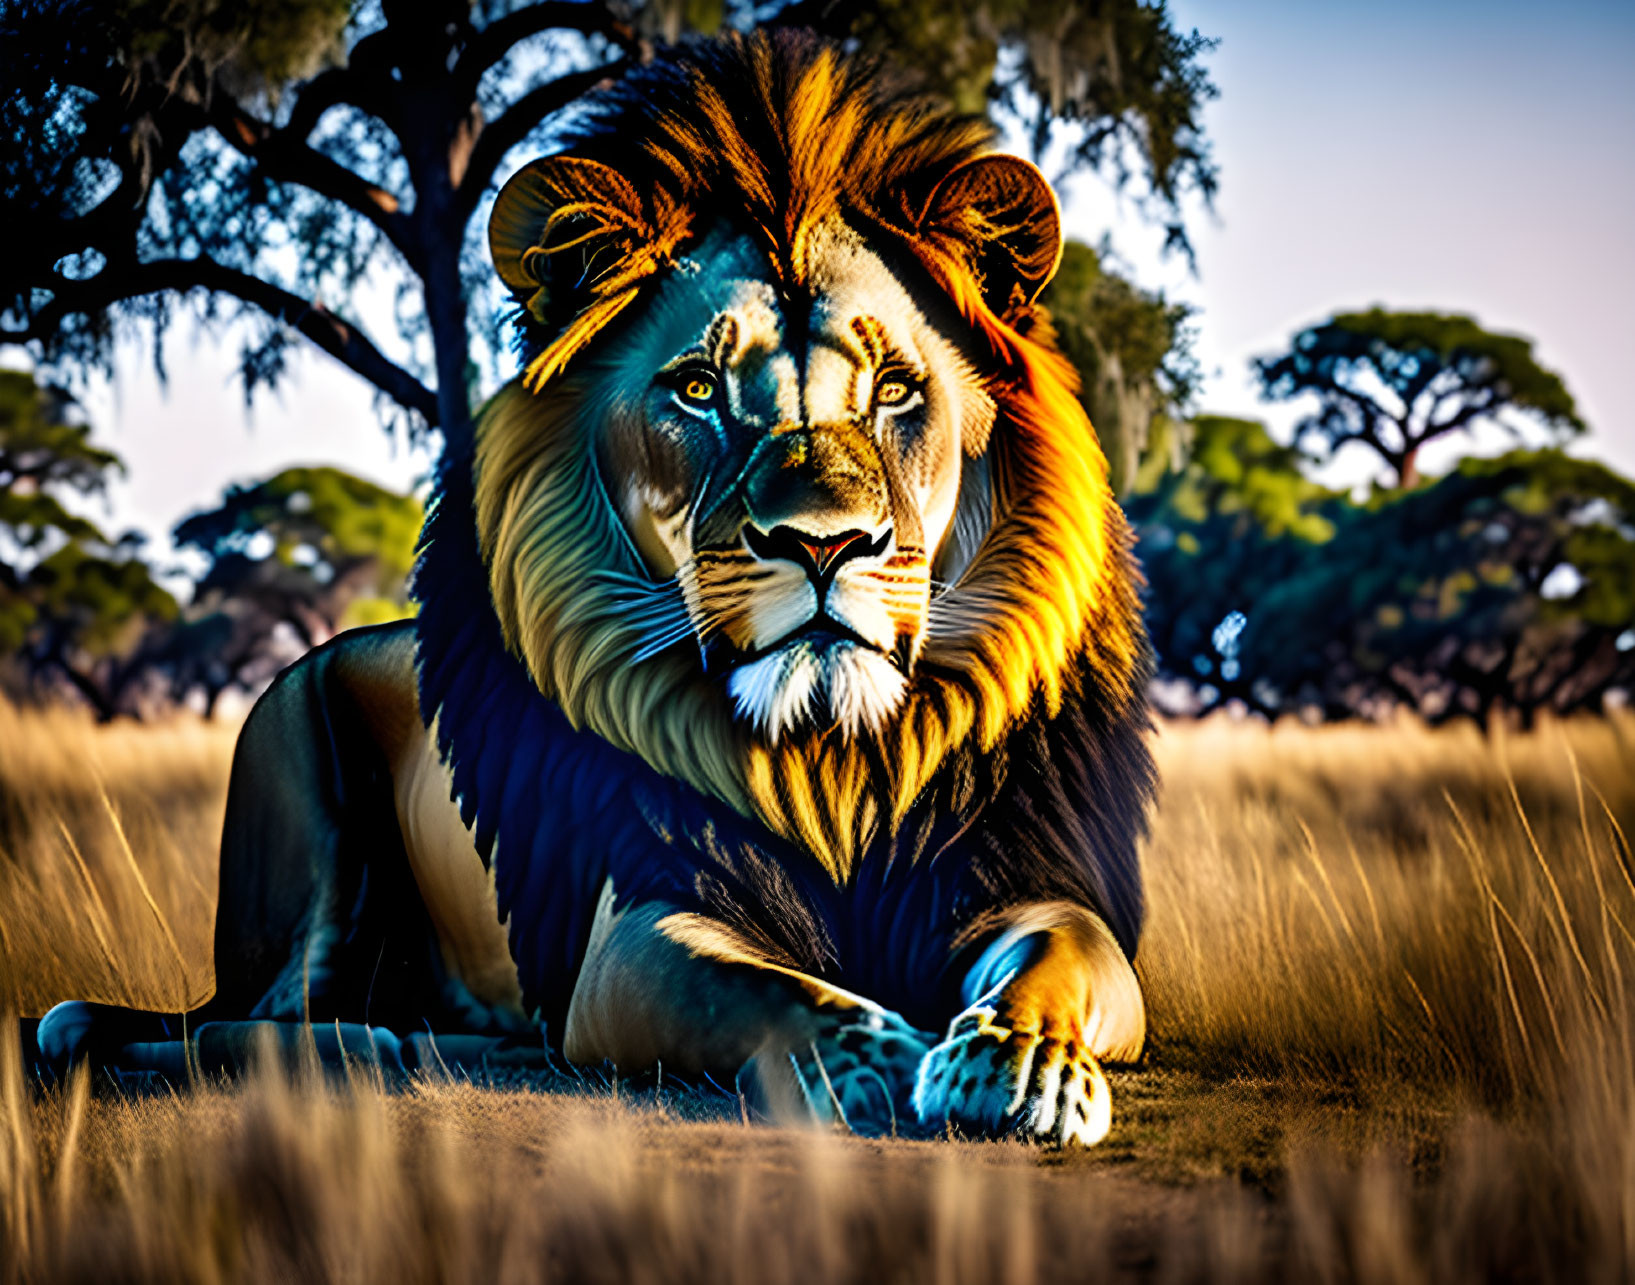 Majestic lion with lush mane in golden savannah under vivid blue sky